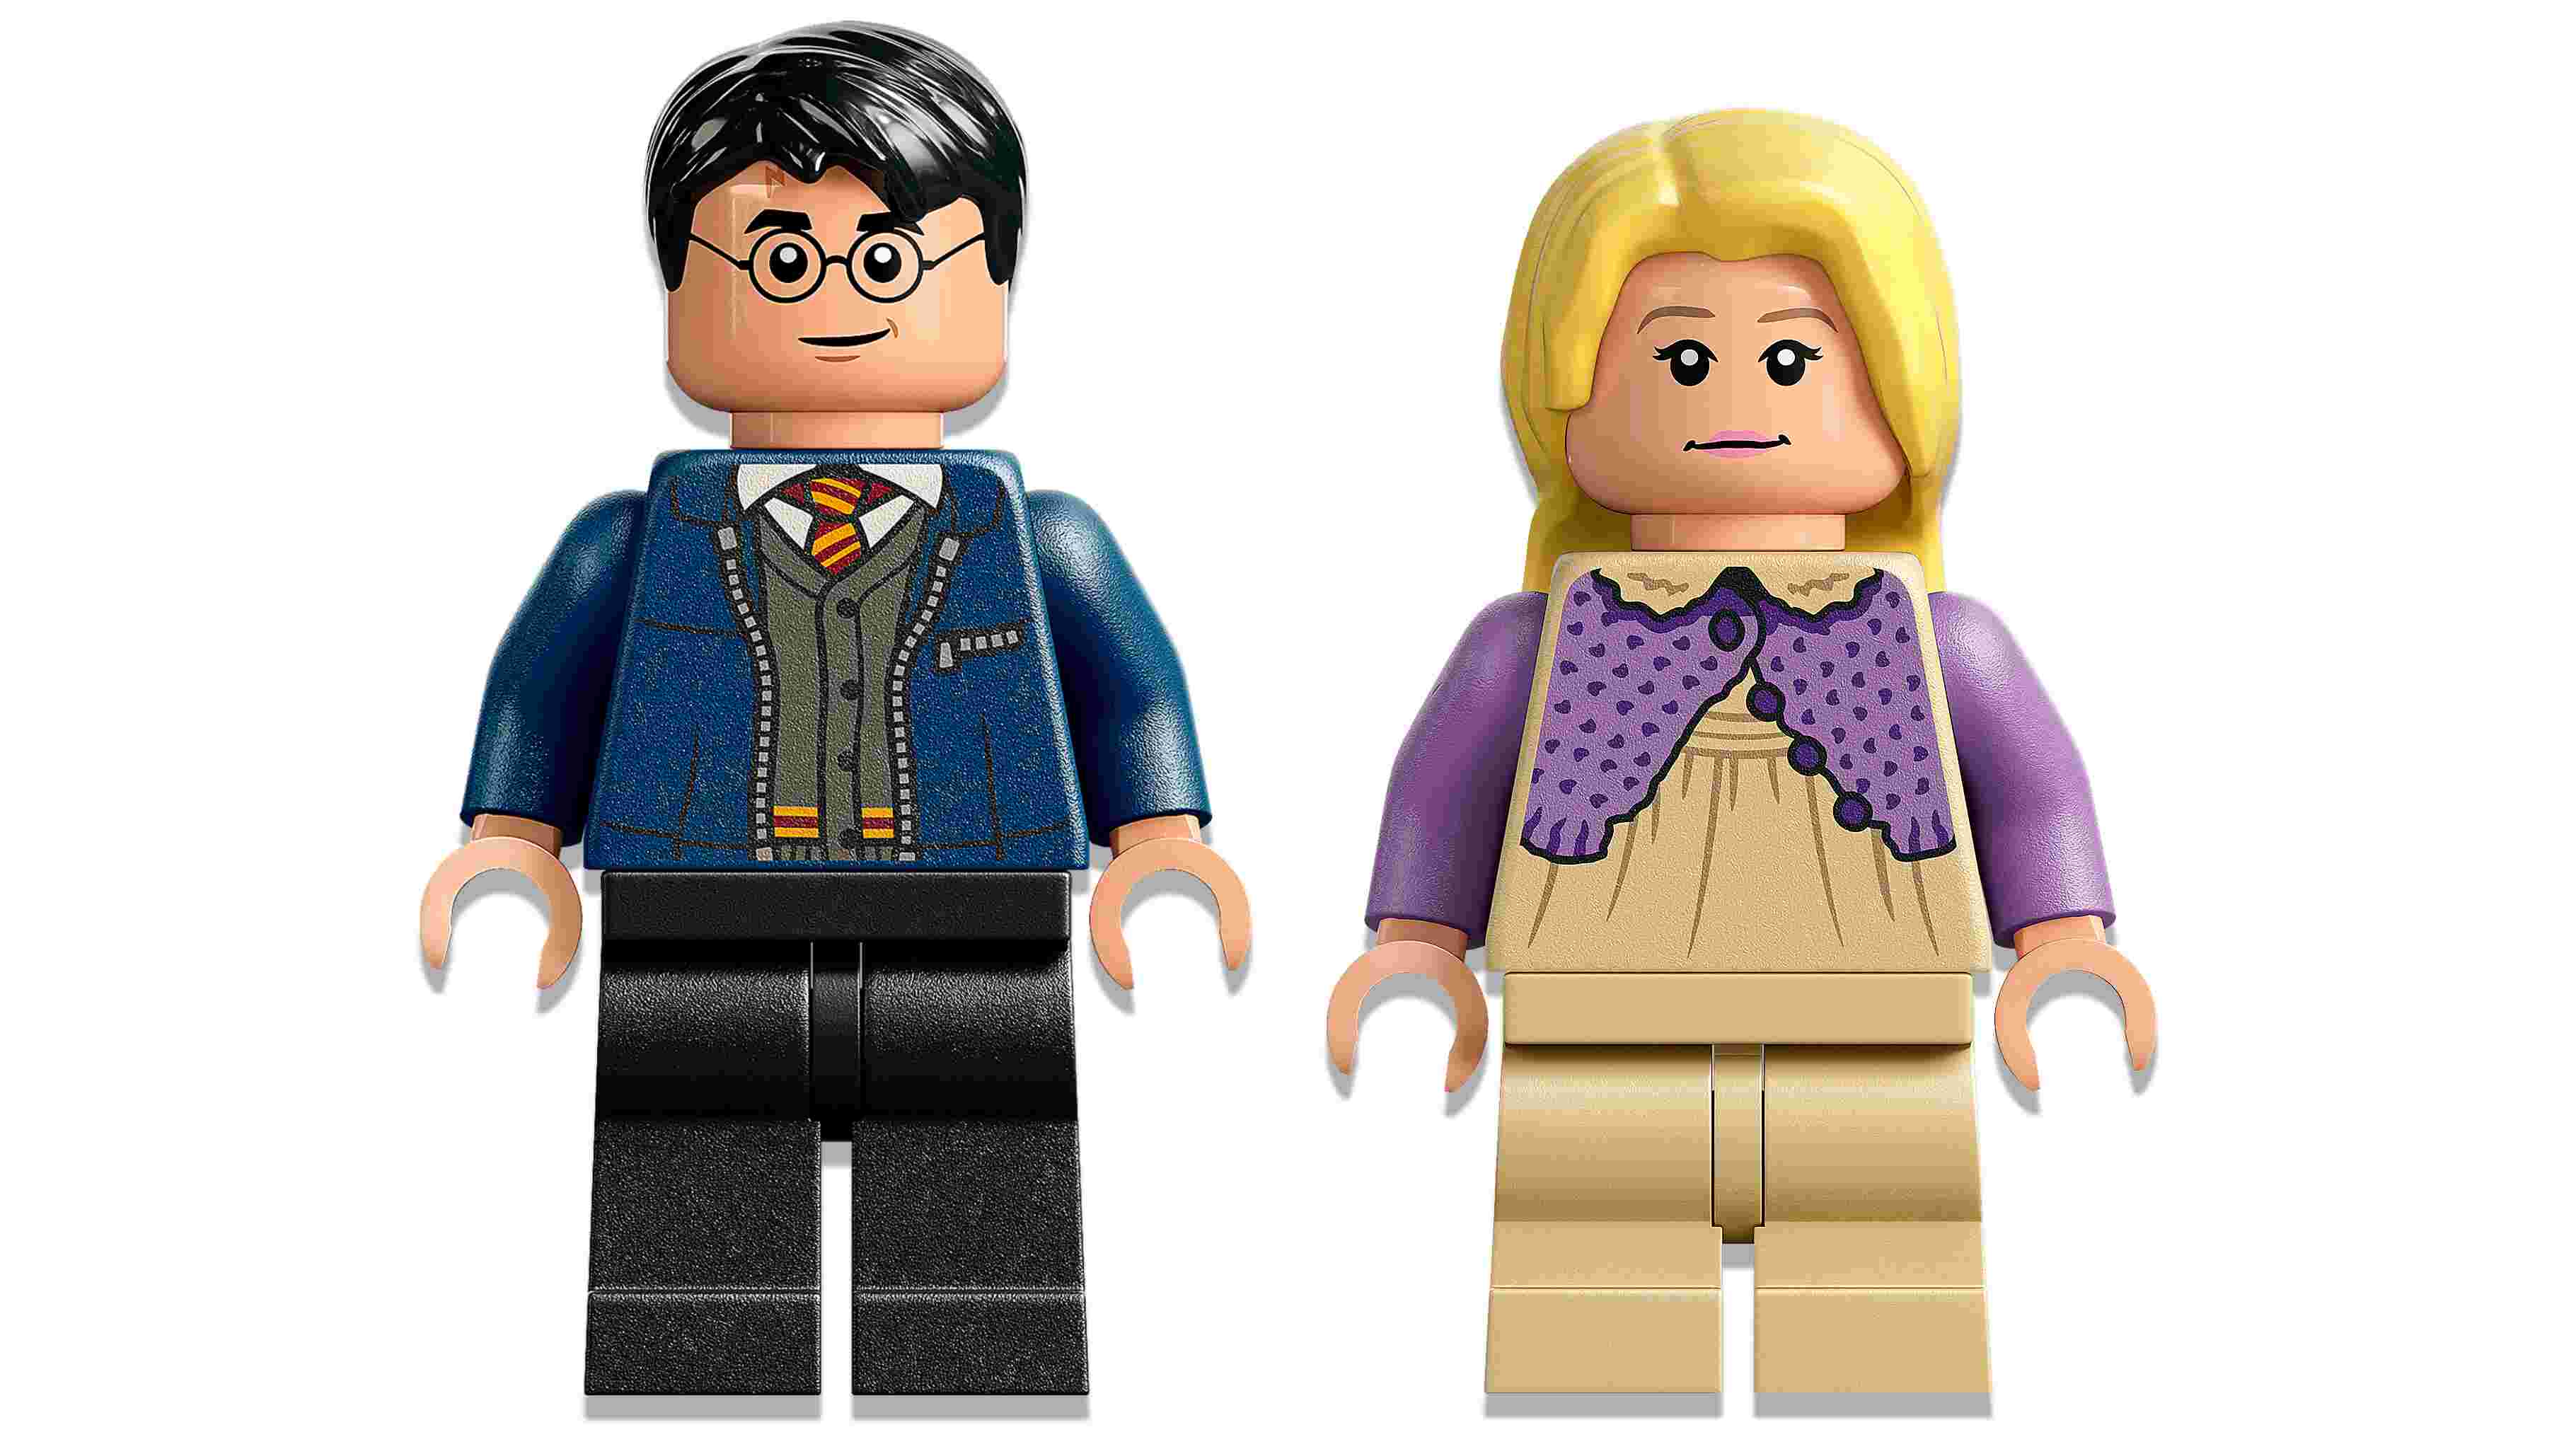 Harry 76400 Thestrals: Lobigo.co.uk: Toys LEGO Carriage and Potter™ Hogwarts™